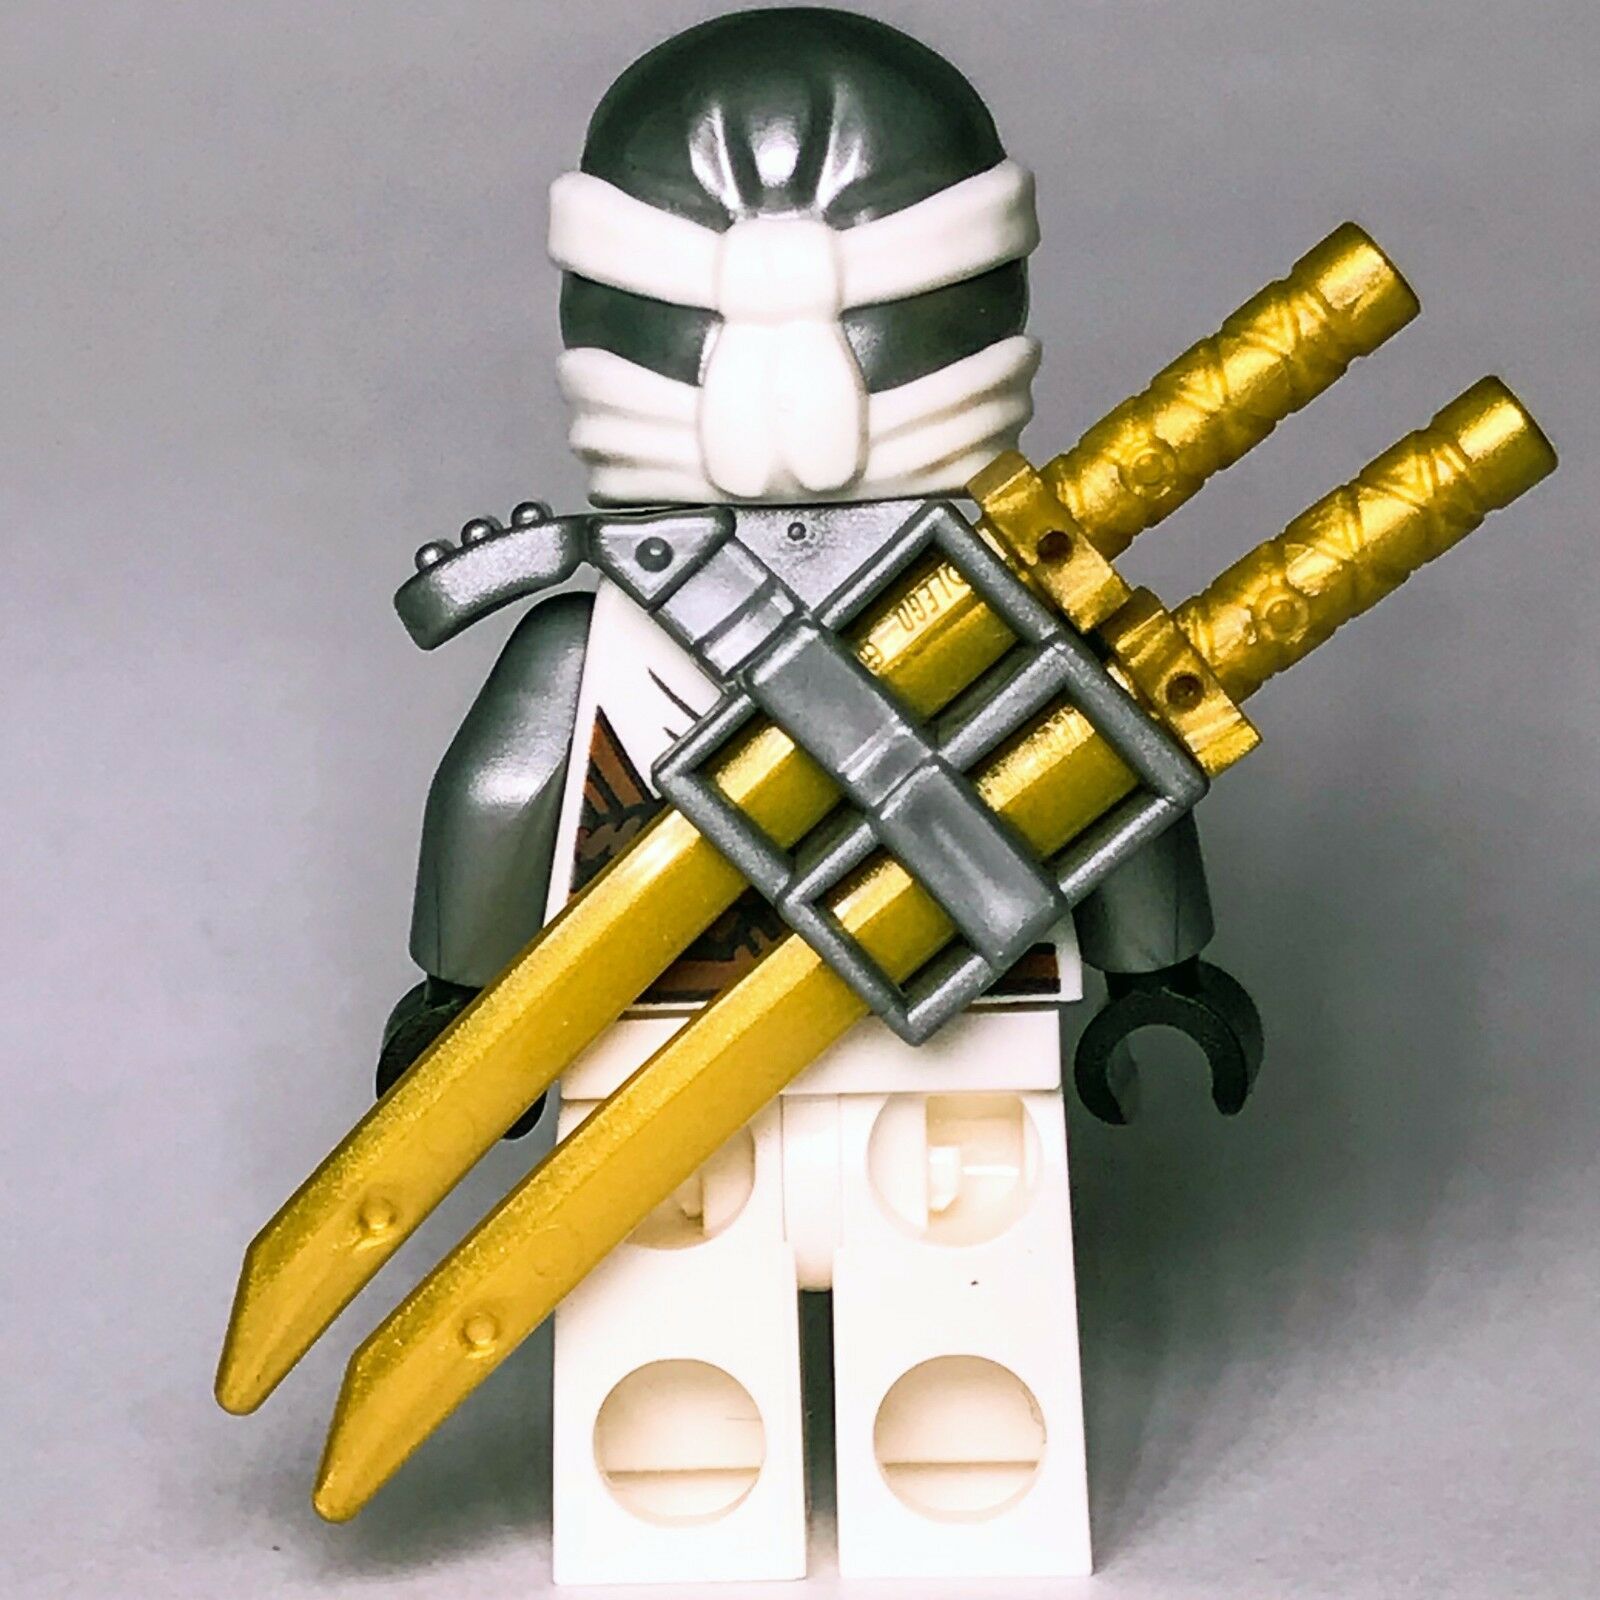 New Ninjago LEGO Ninja Zane Master of Ice Day of the Departed Minifigure 70595 - Bricks & Figures